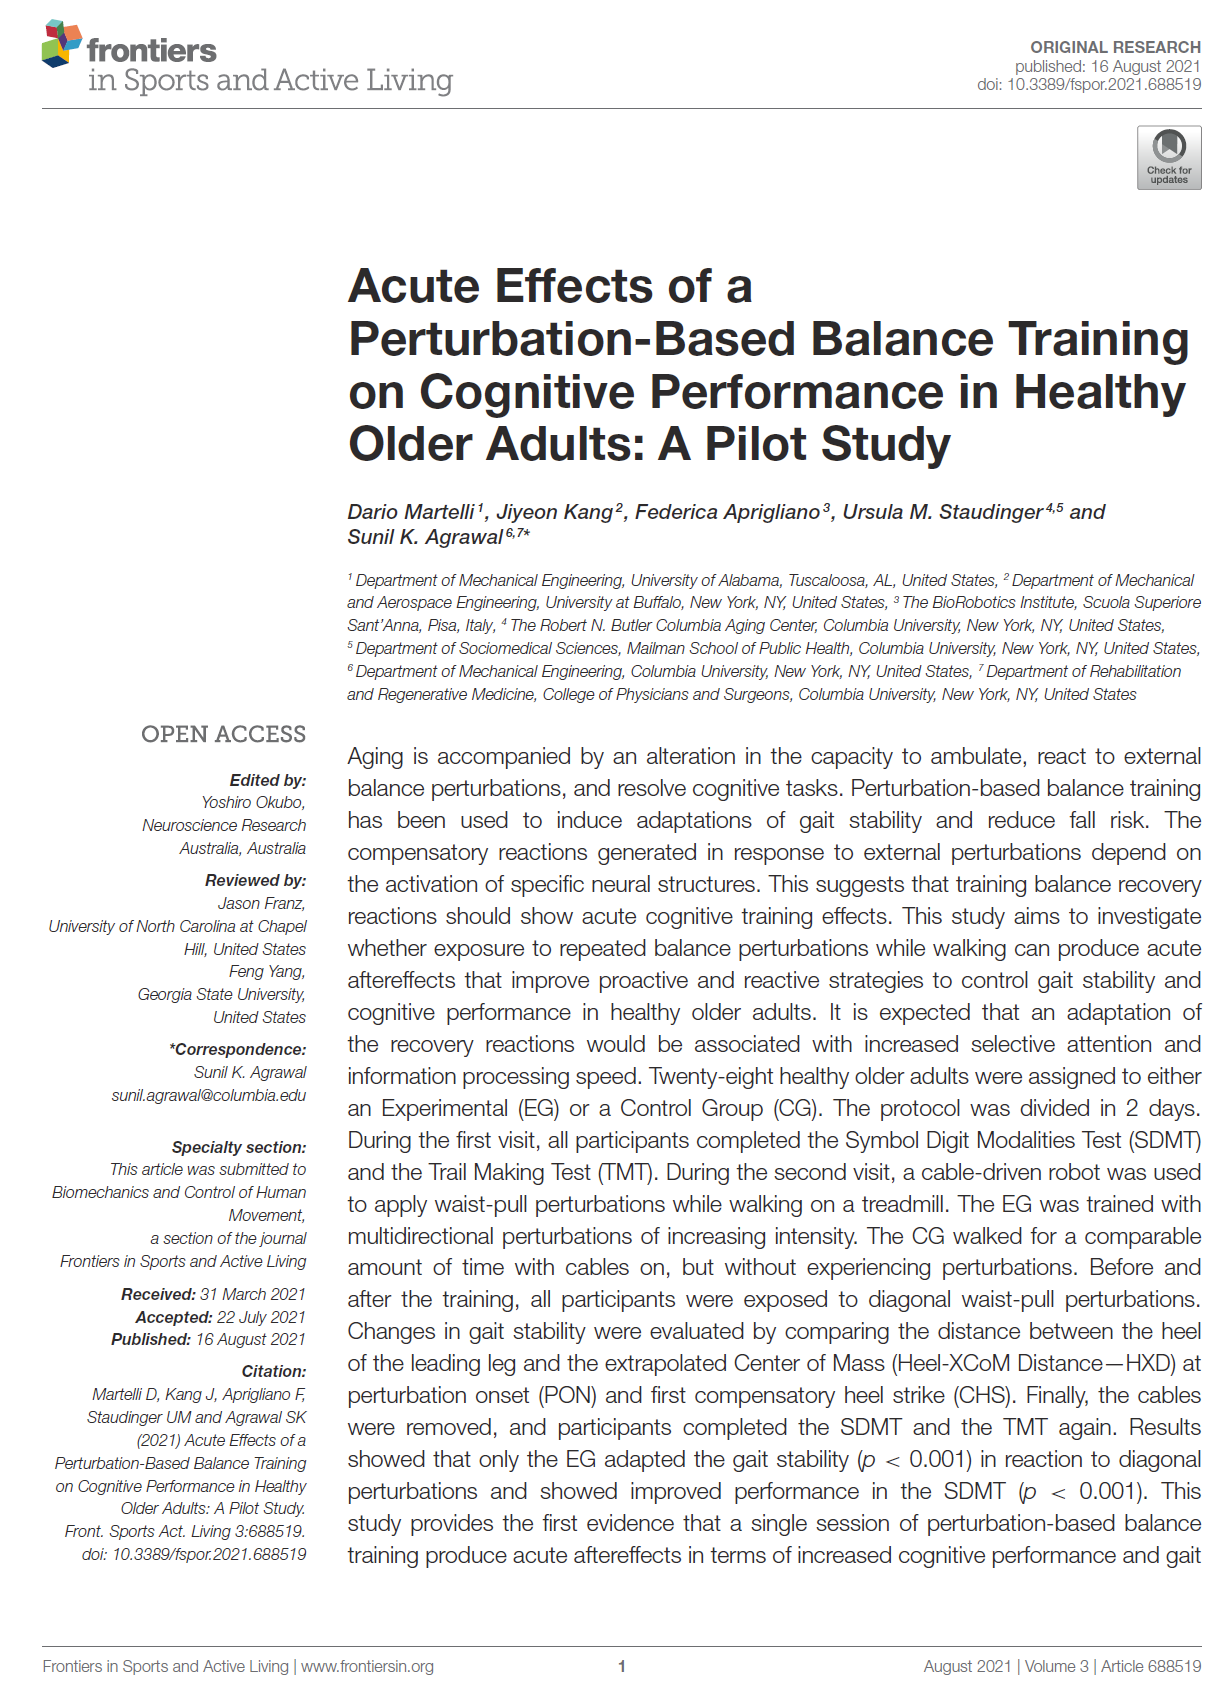 Perturbation-based balance training improves cognition in older adults.